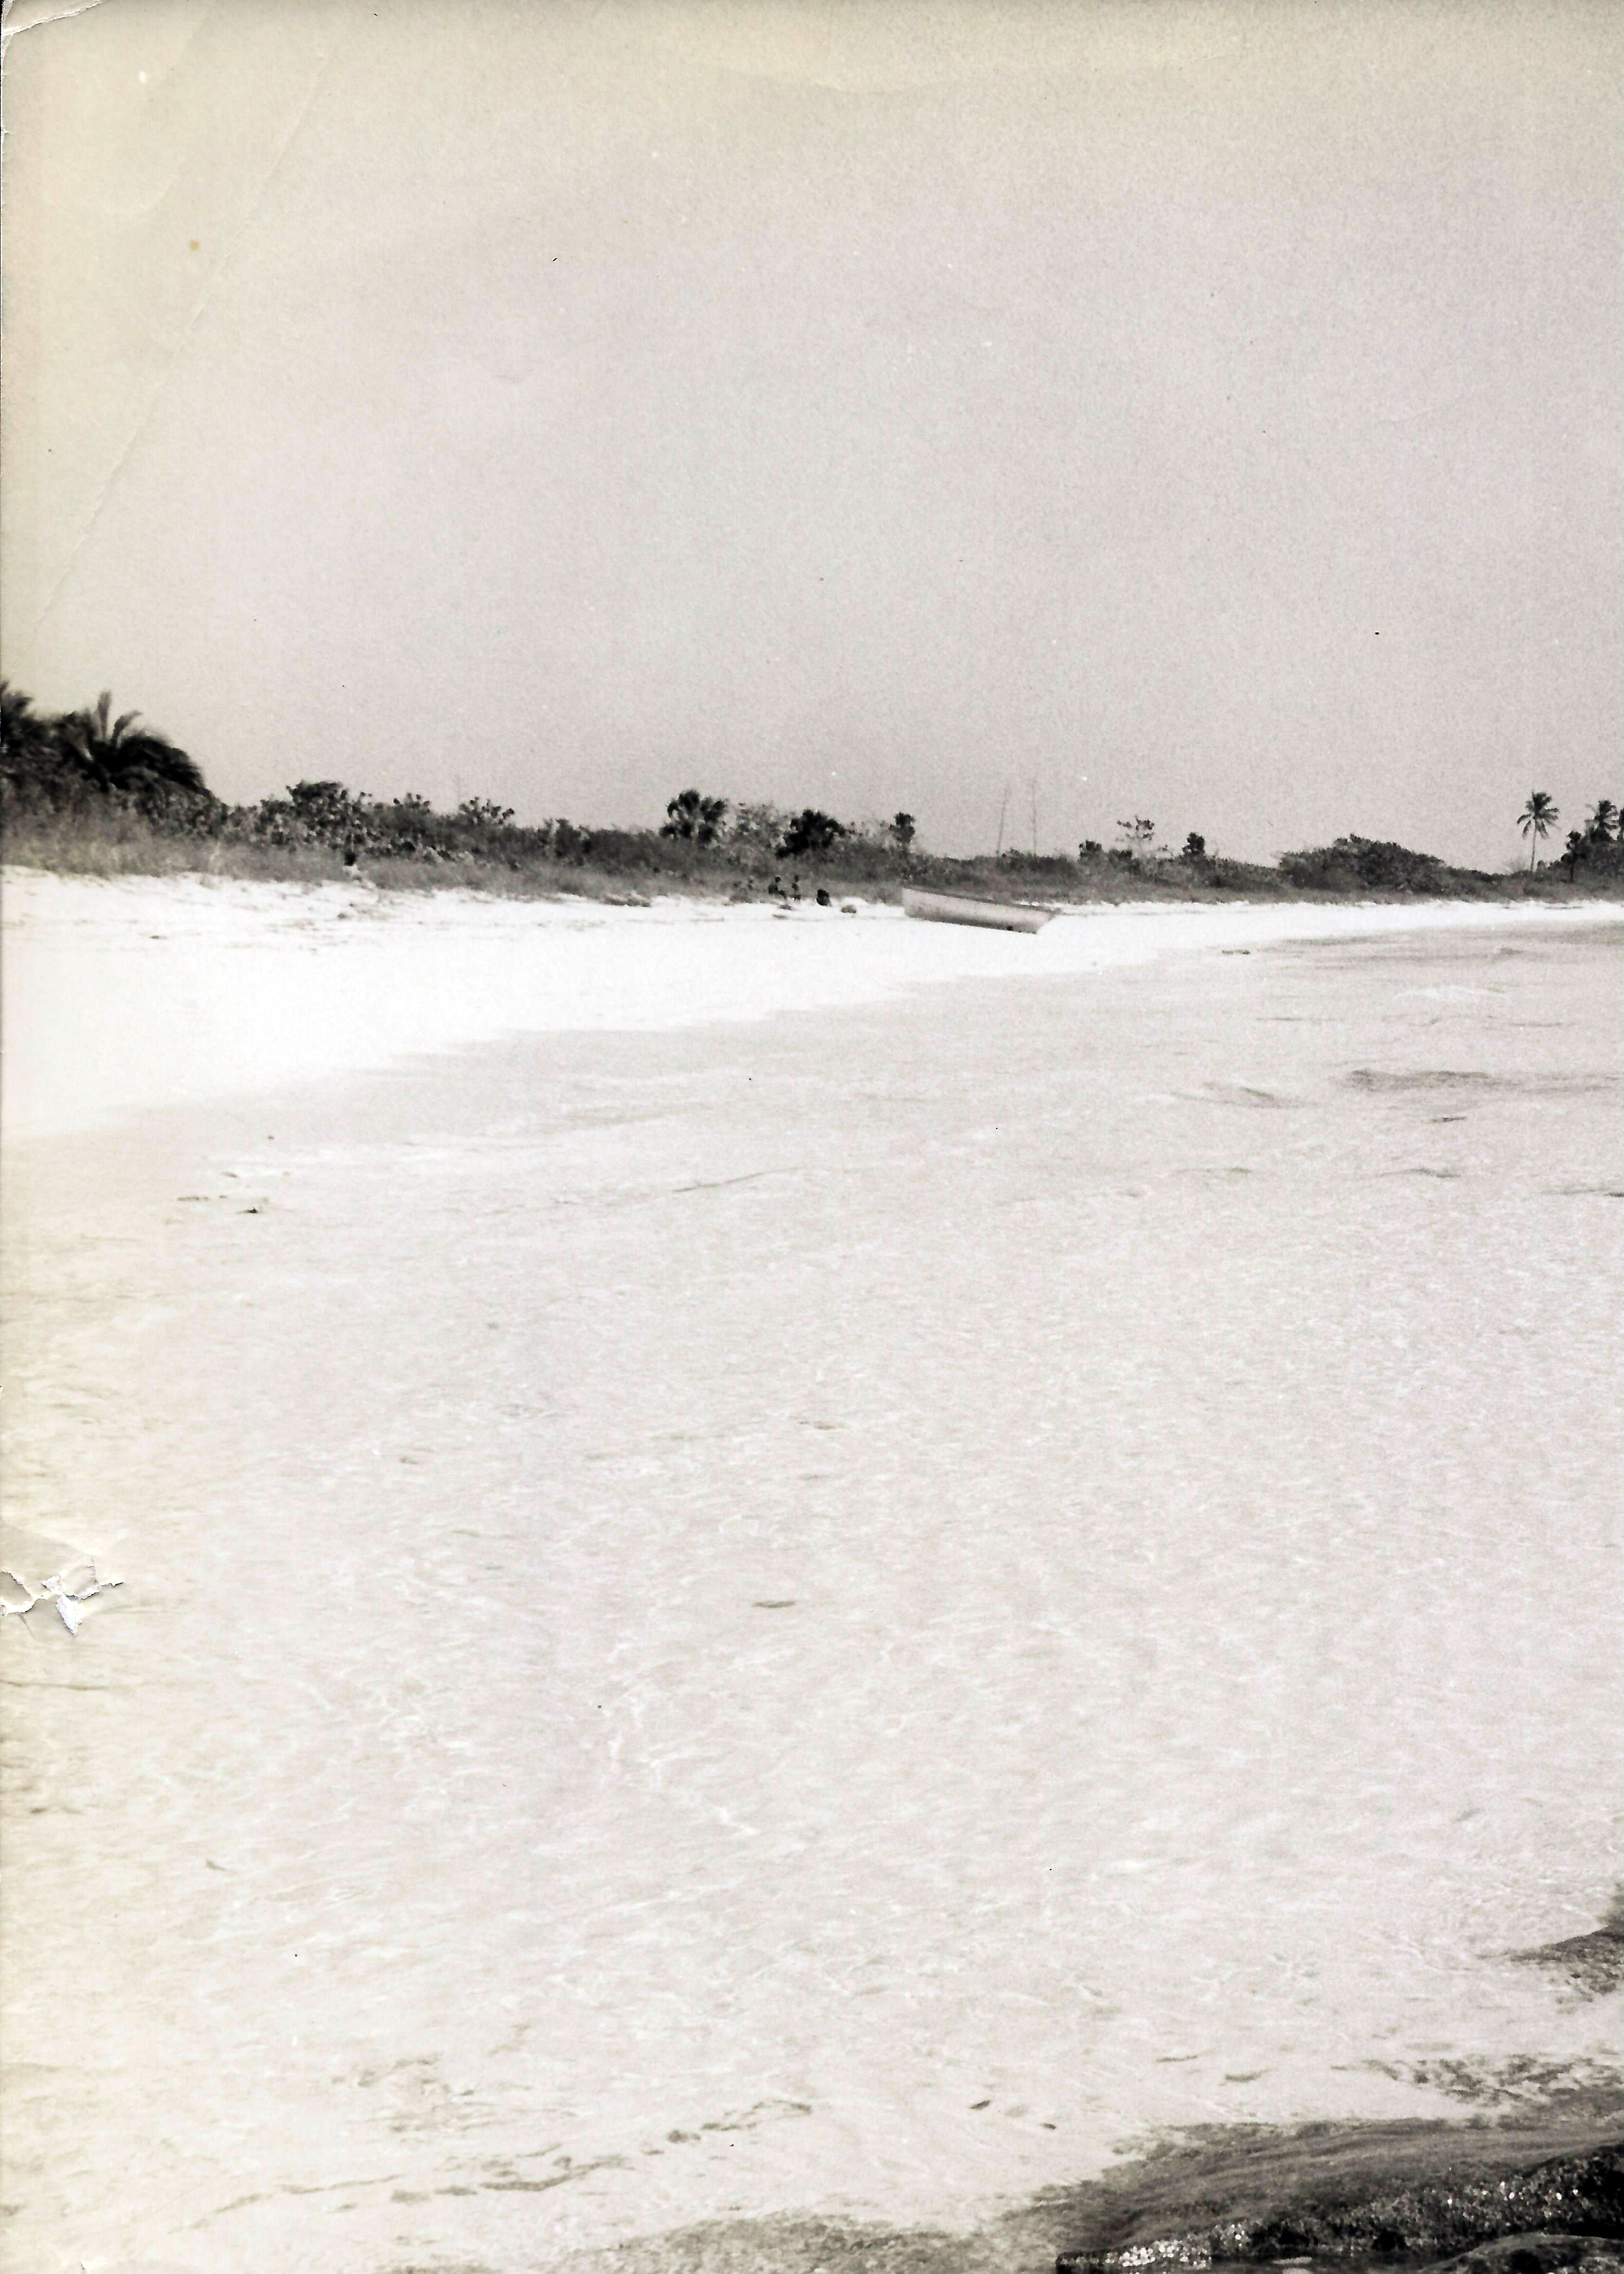 Grand Bahama beach, 1940's